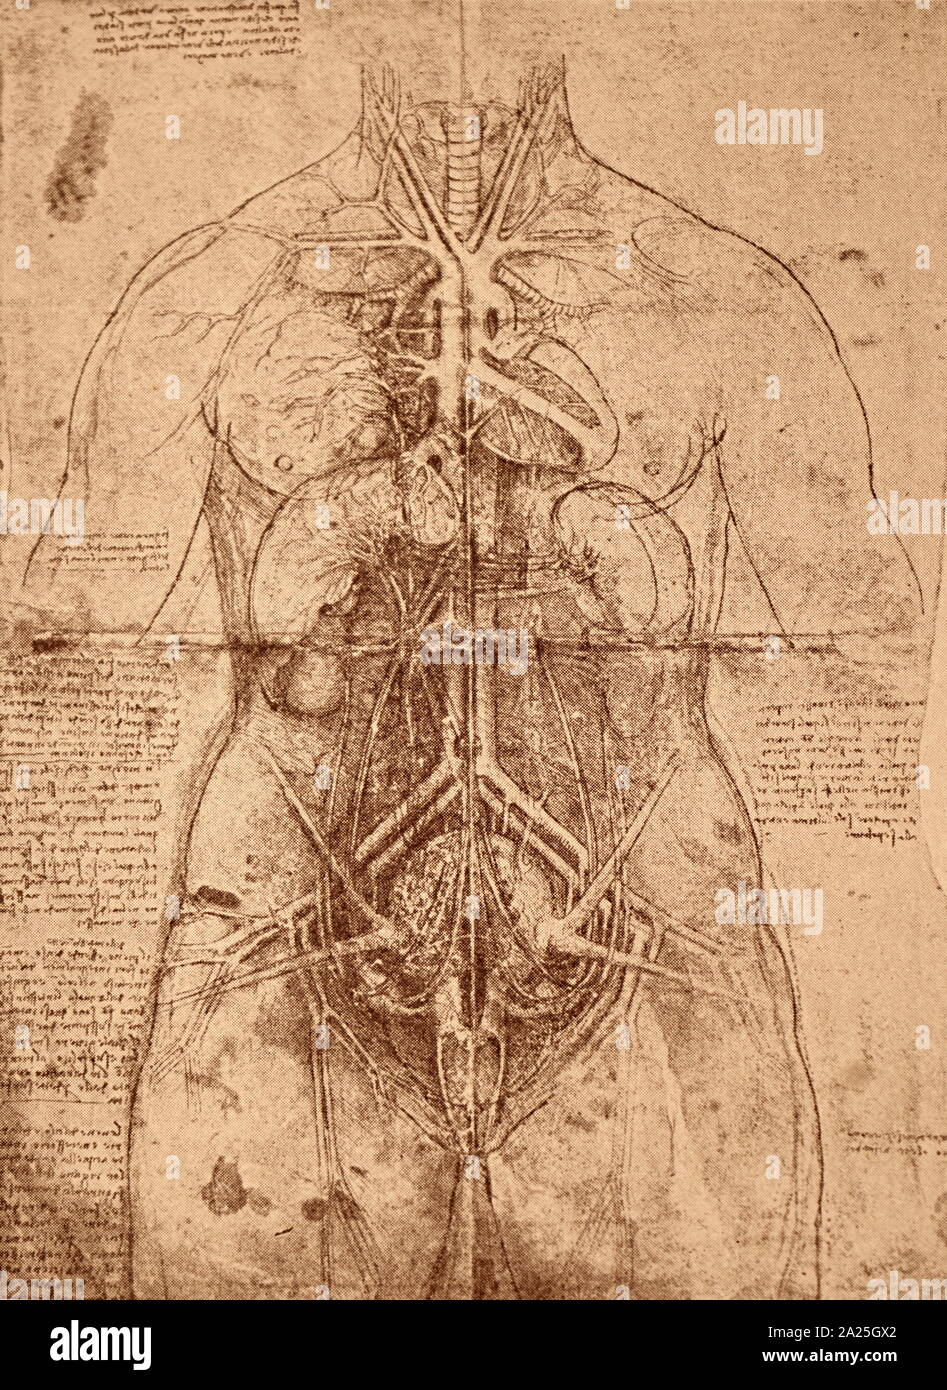 Studio anatomico da Leonardo da Vinci. Leonardo di ser Piero da Vinci (1452-1519) un polymath italiana del Rinascimento. Foto Stock